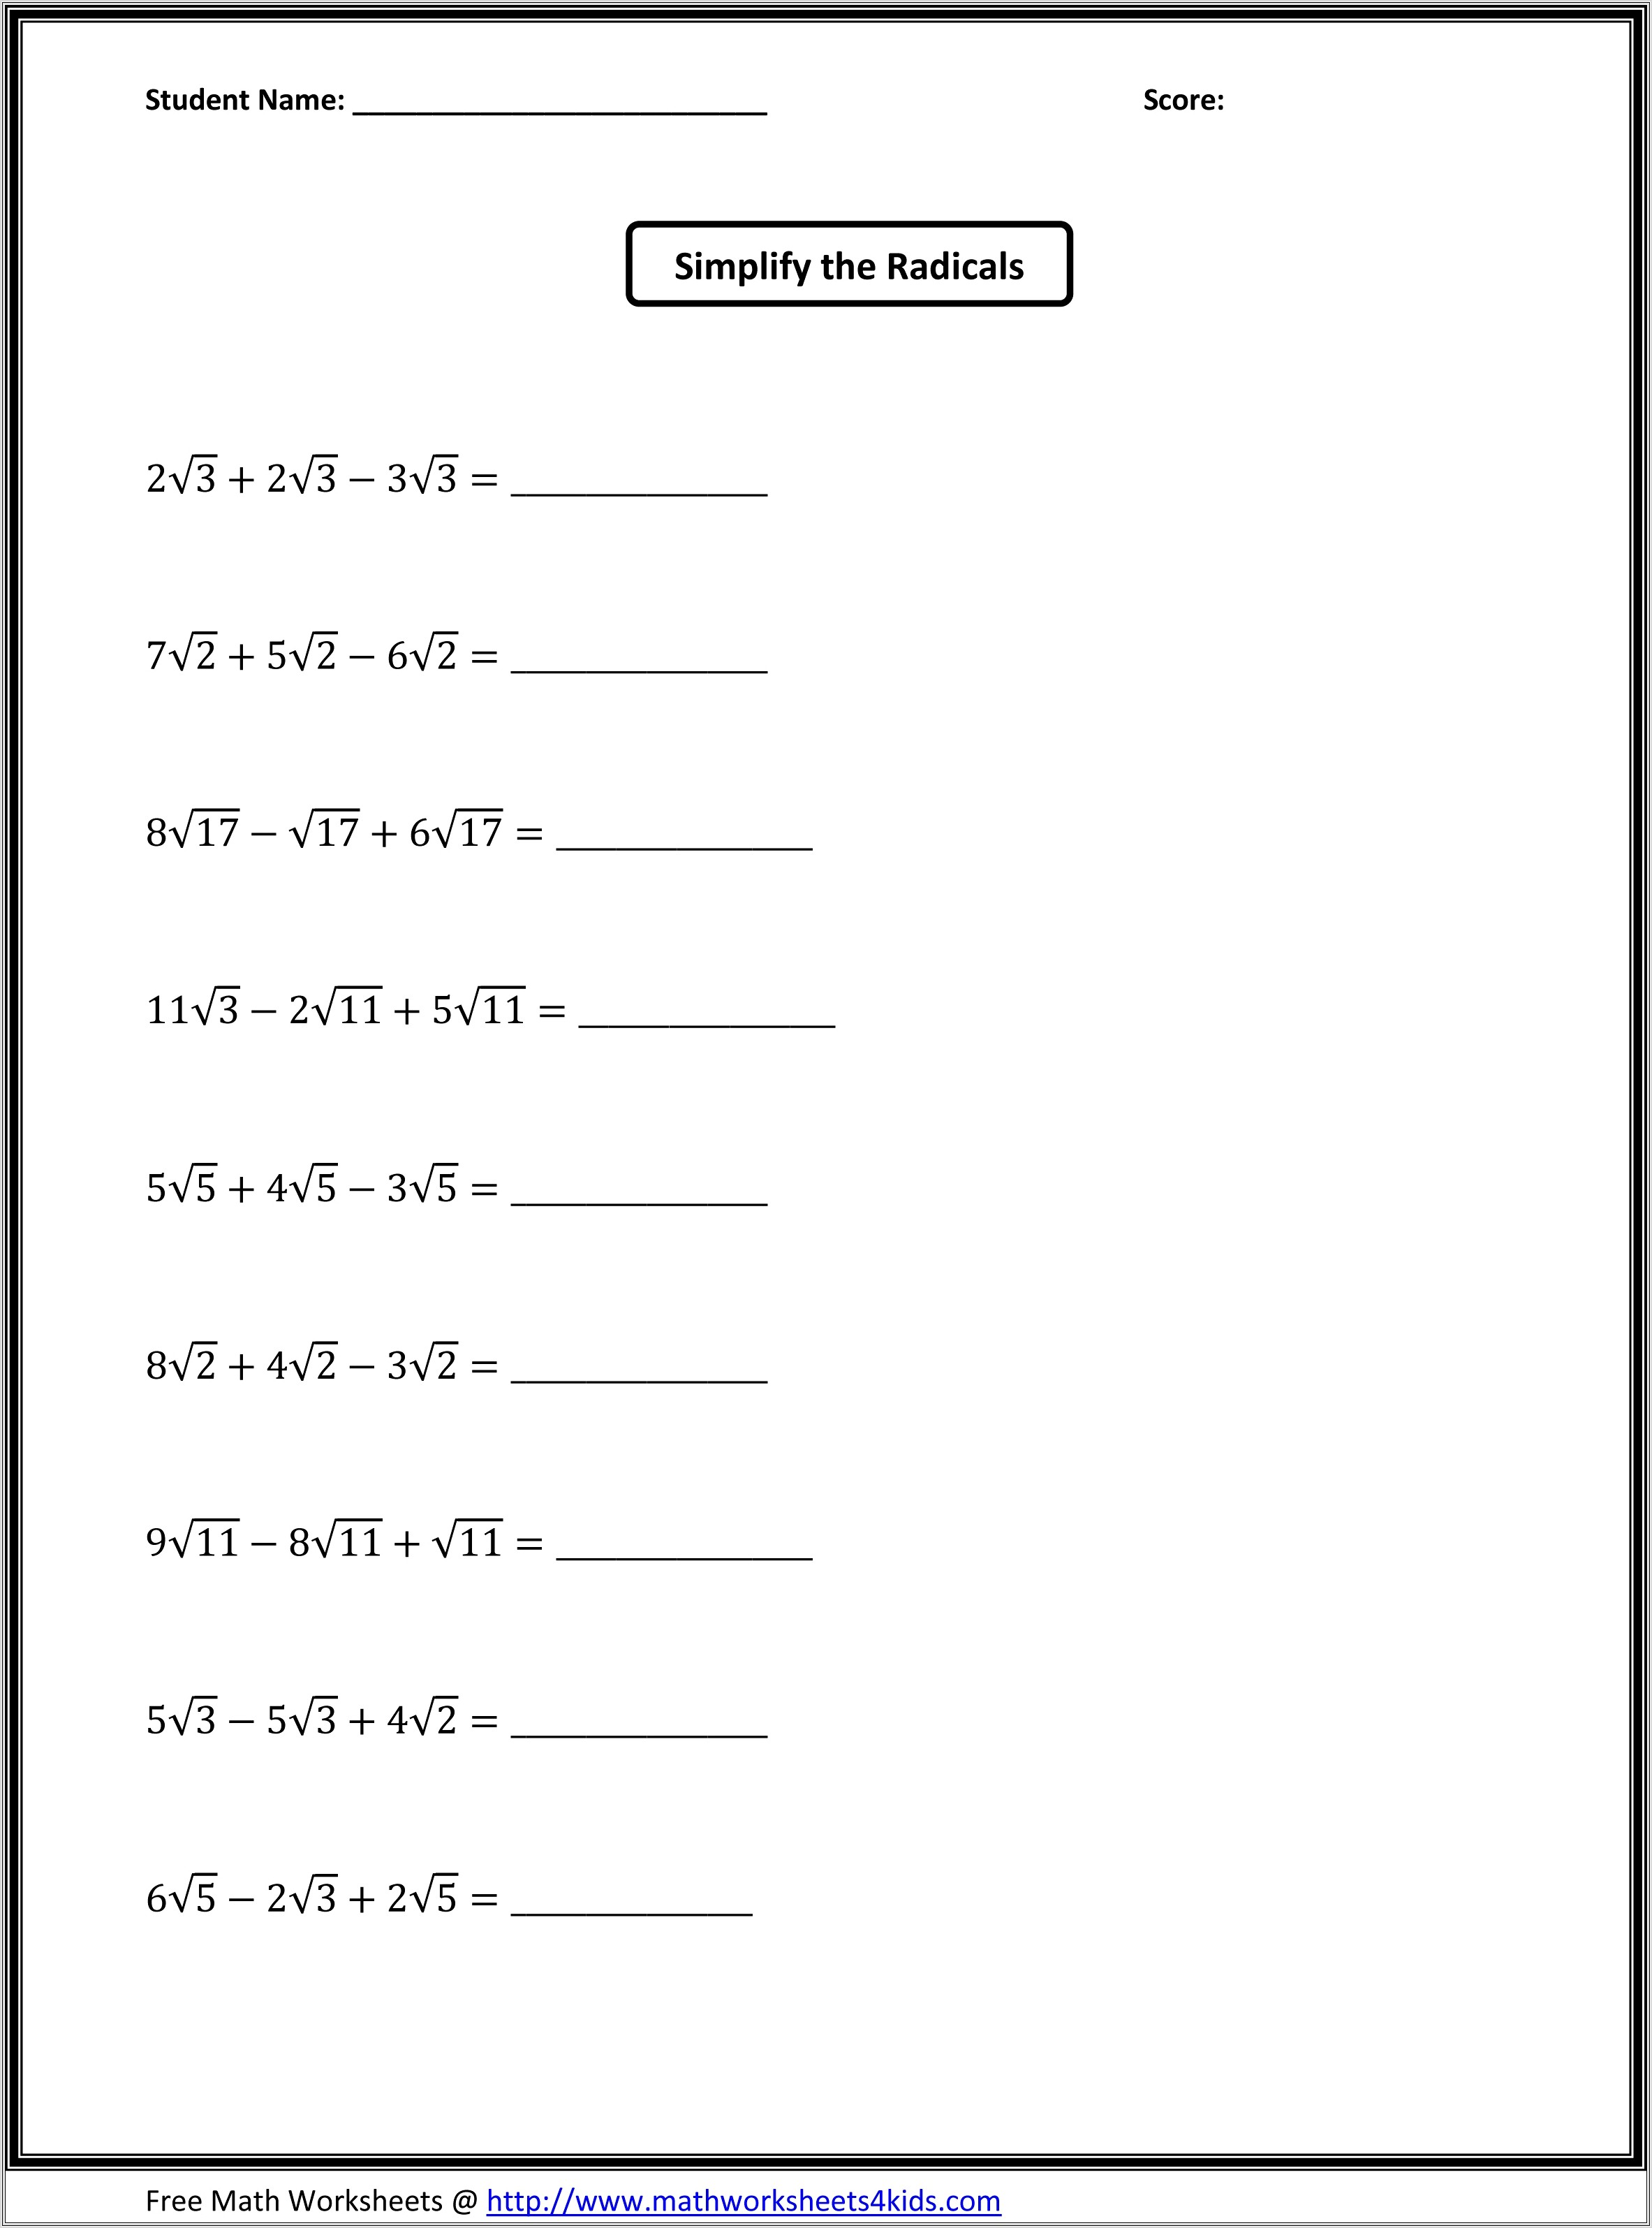 Math Worksheet For 7th Grade